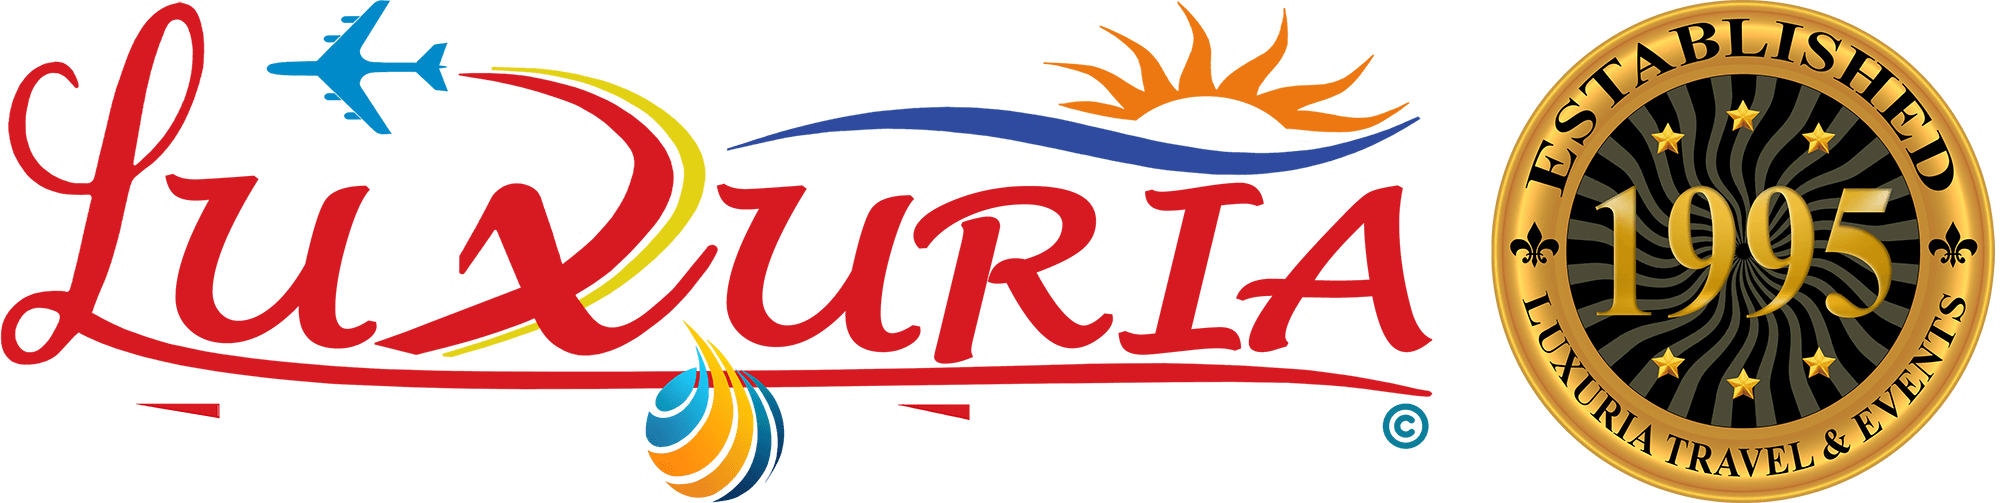 Luxuria Travel & Events | سوق السفر العربي 2016 يركز على سياحة الشرائح الوسطى ⋆ Luxuria Travel & Events